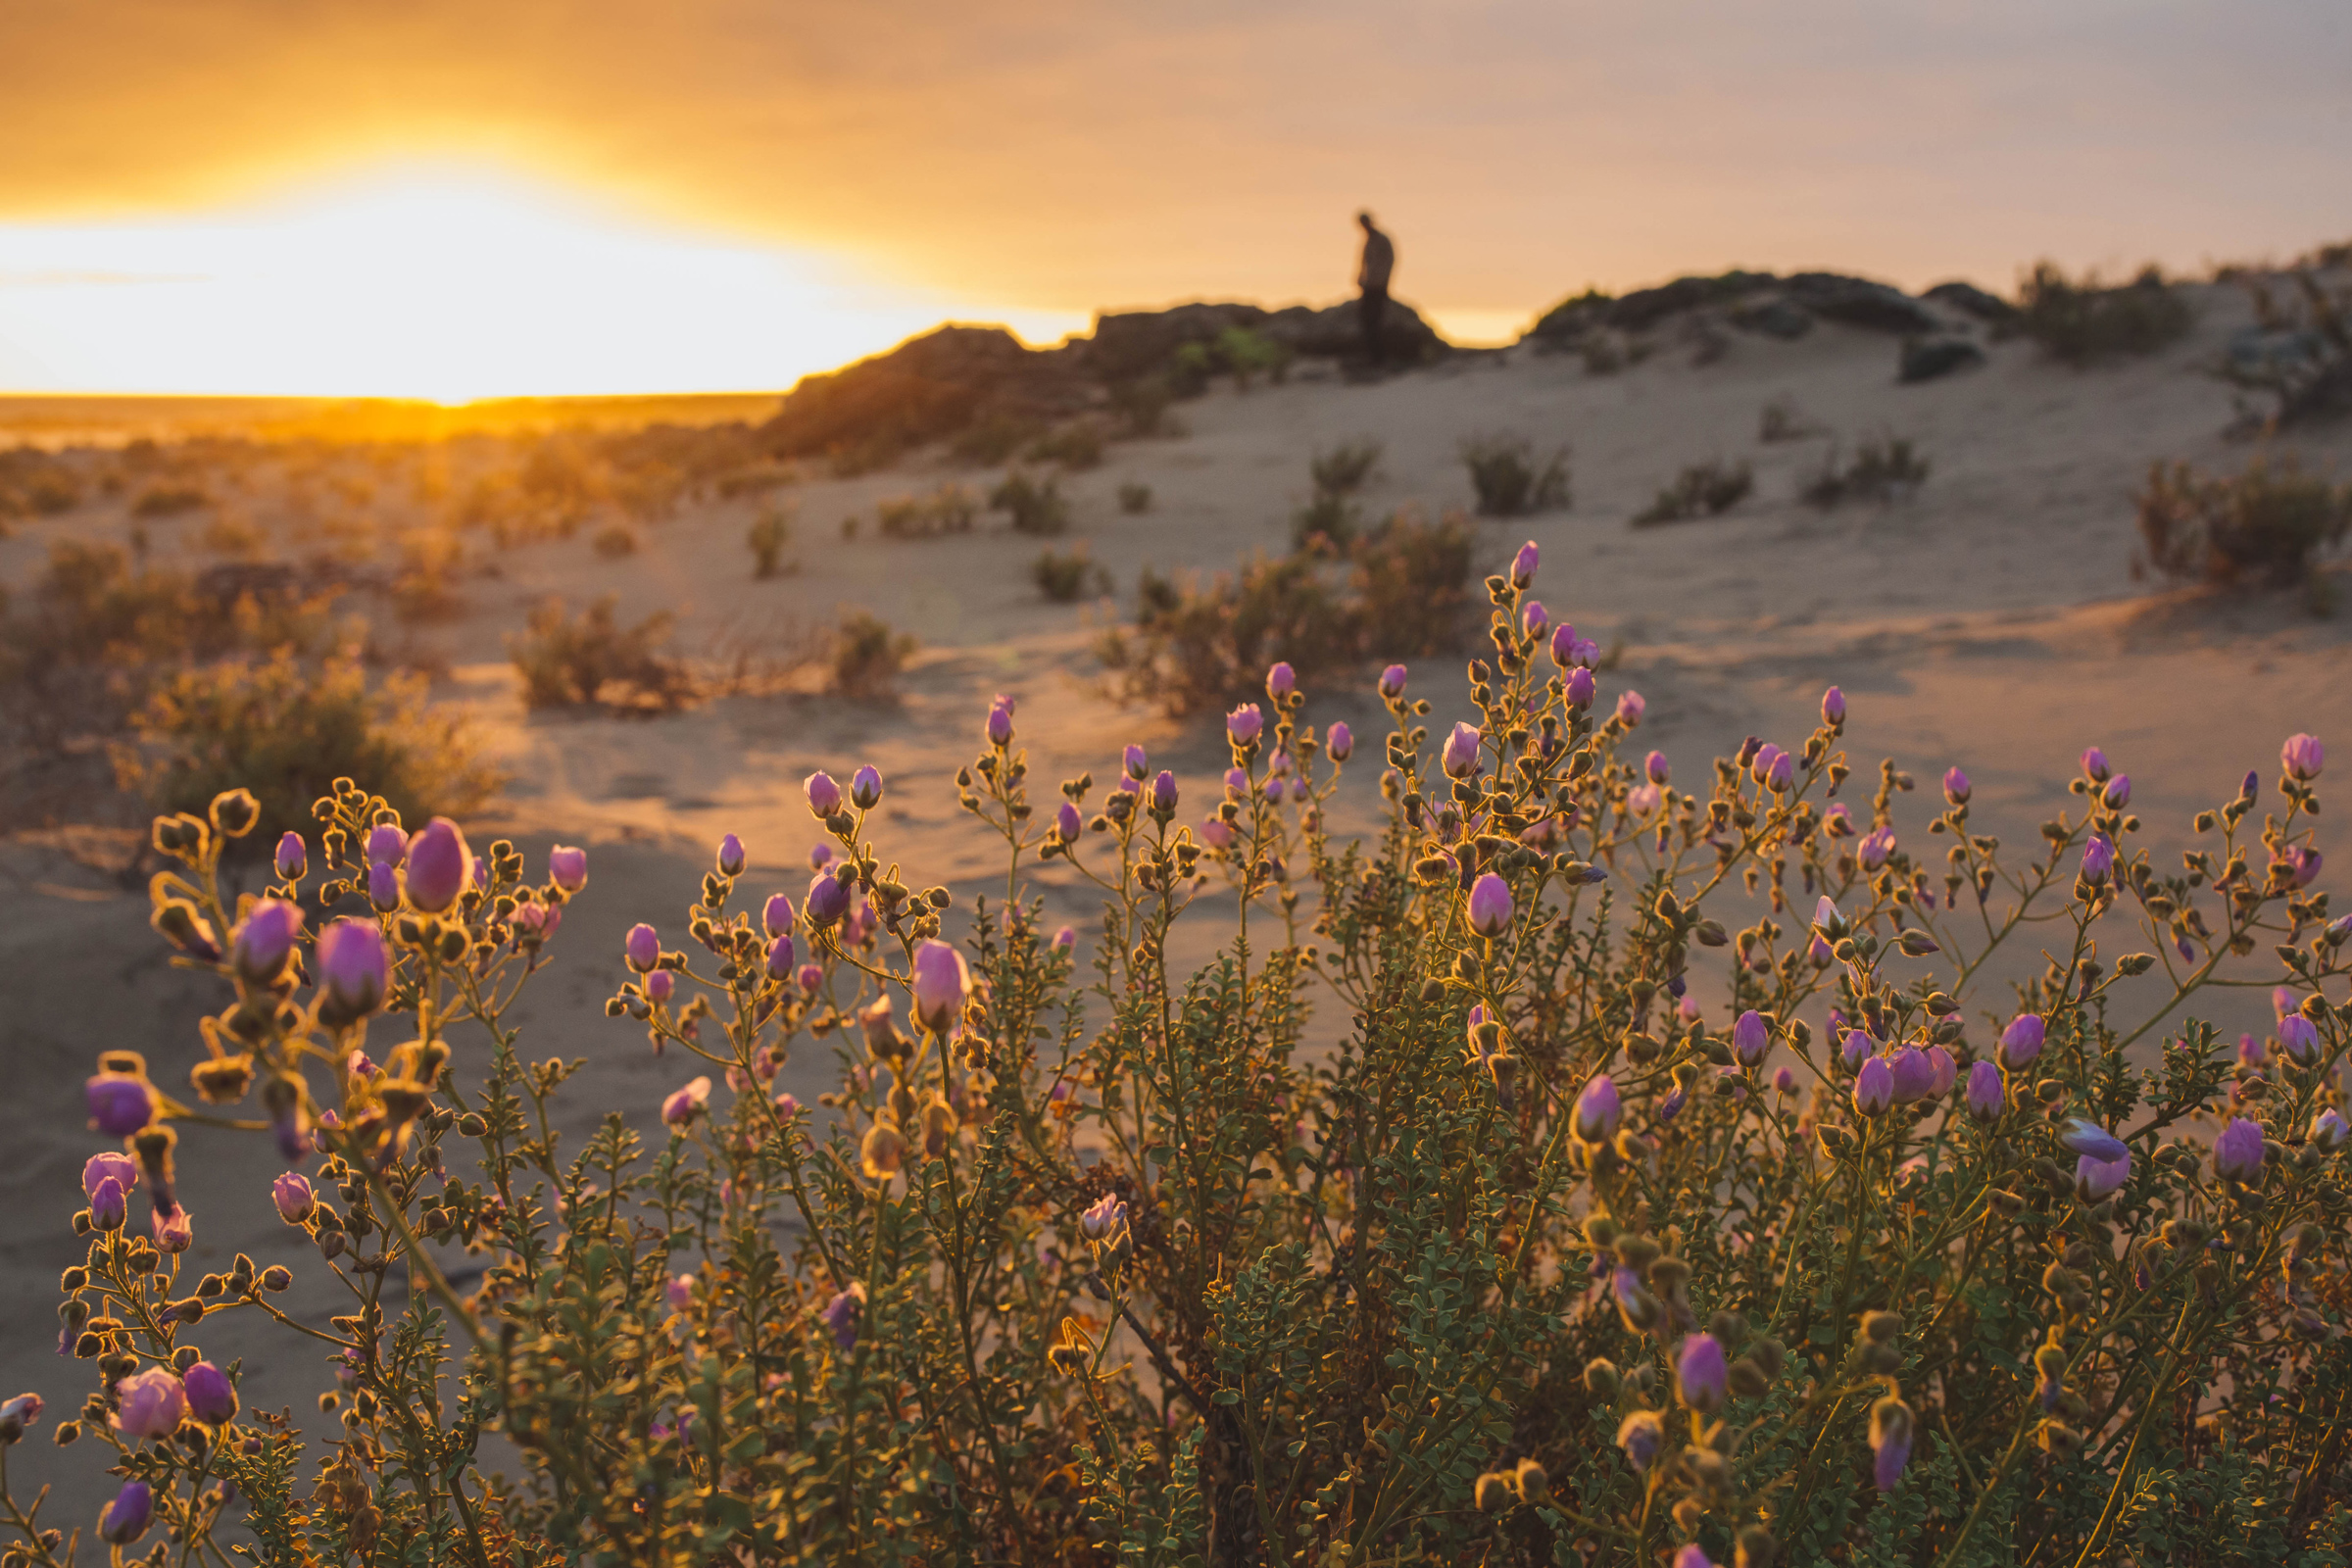 Malvillas (Cristaria calderana) en desierto florido 2017. Créditos: ©Amelia Órtuzar